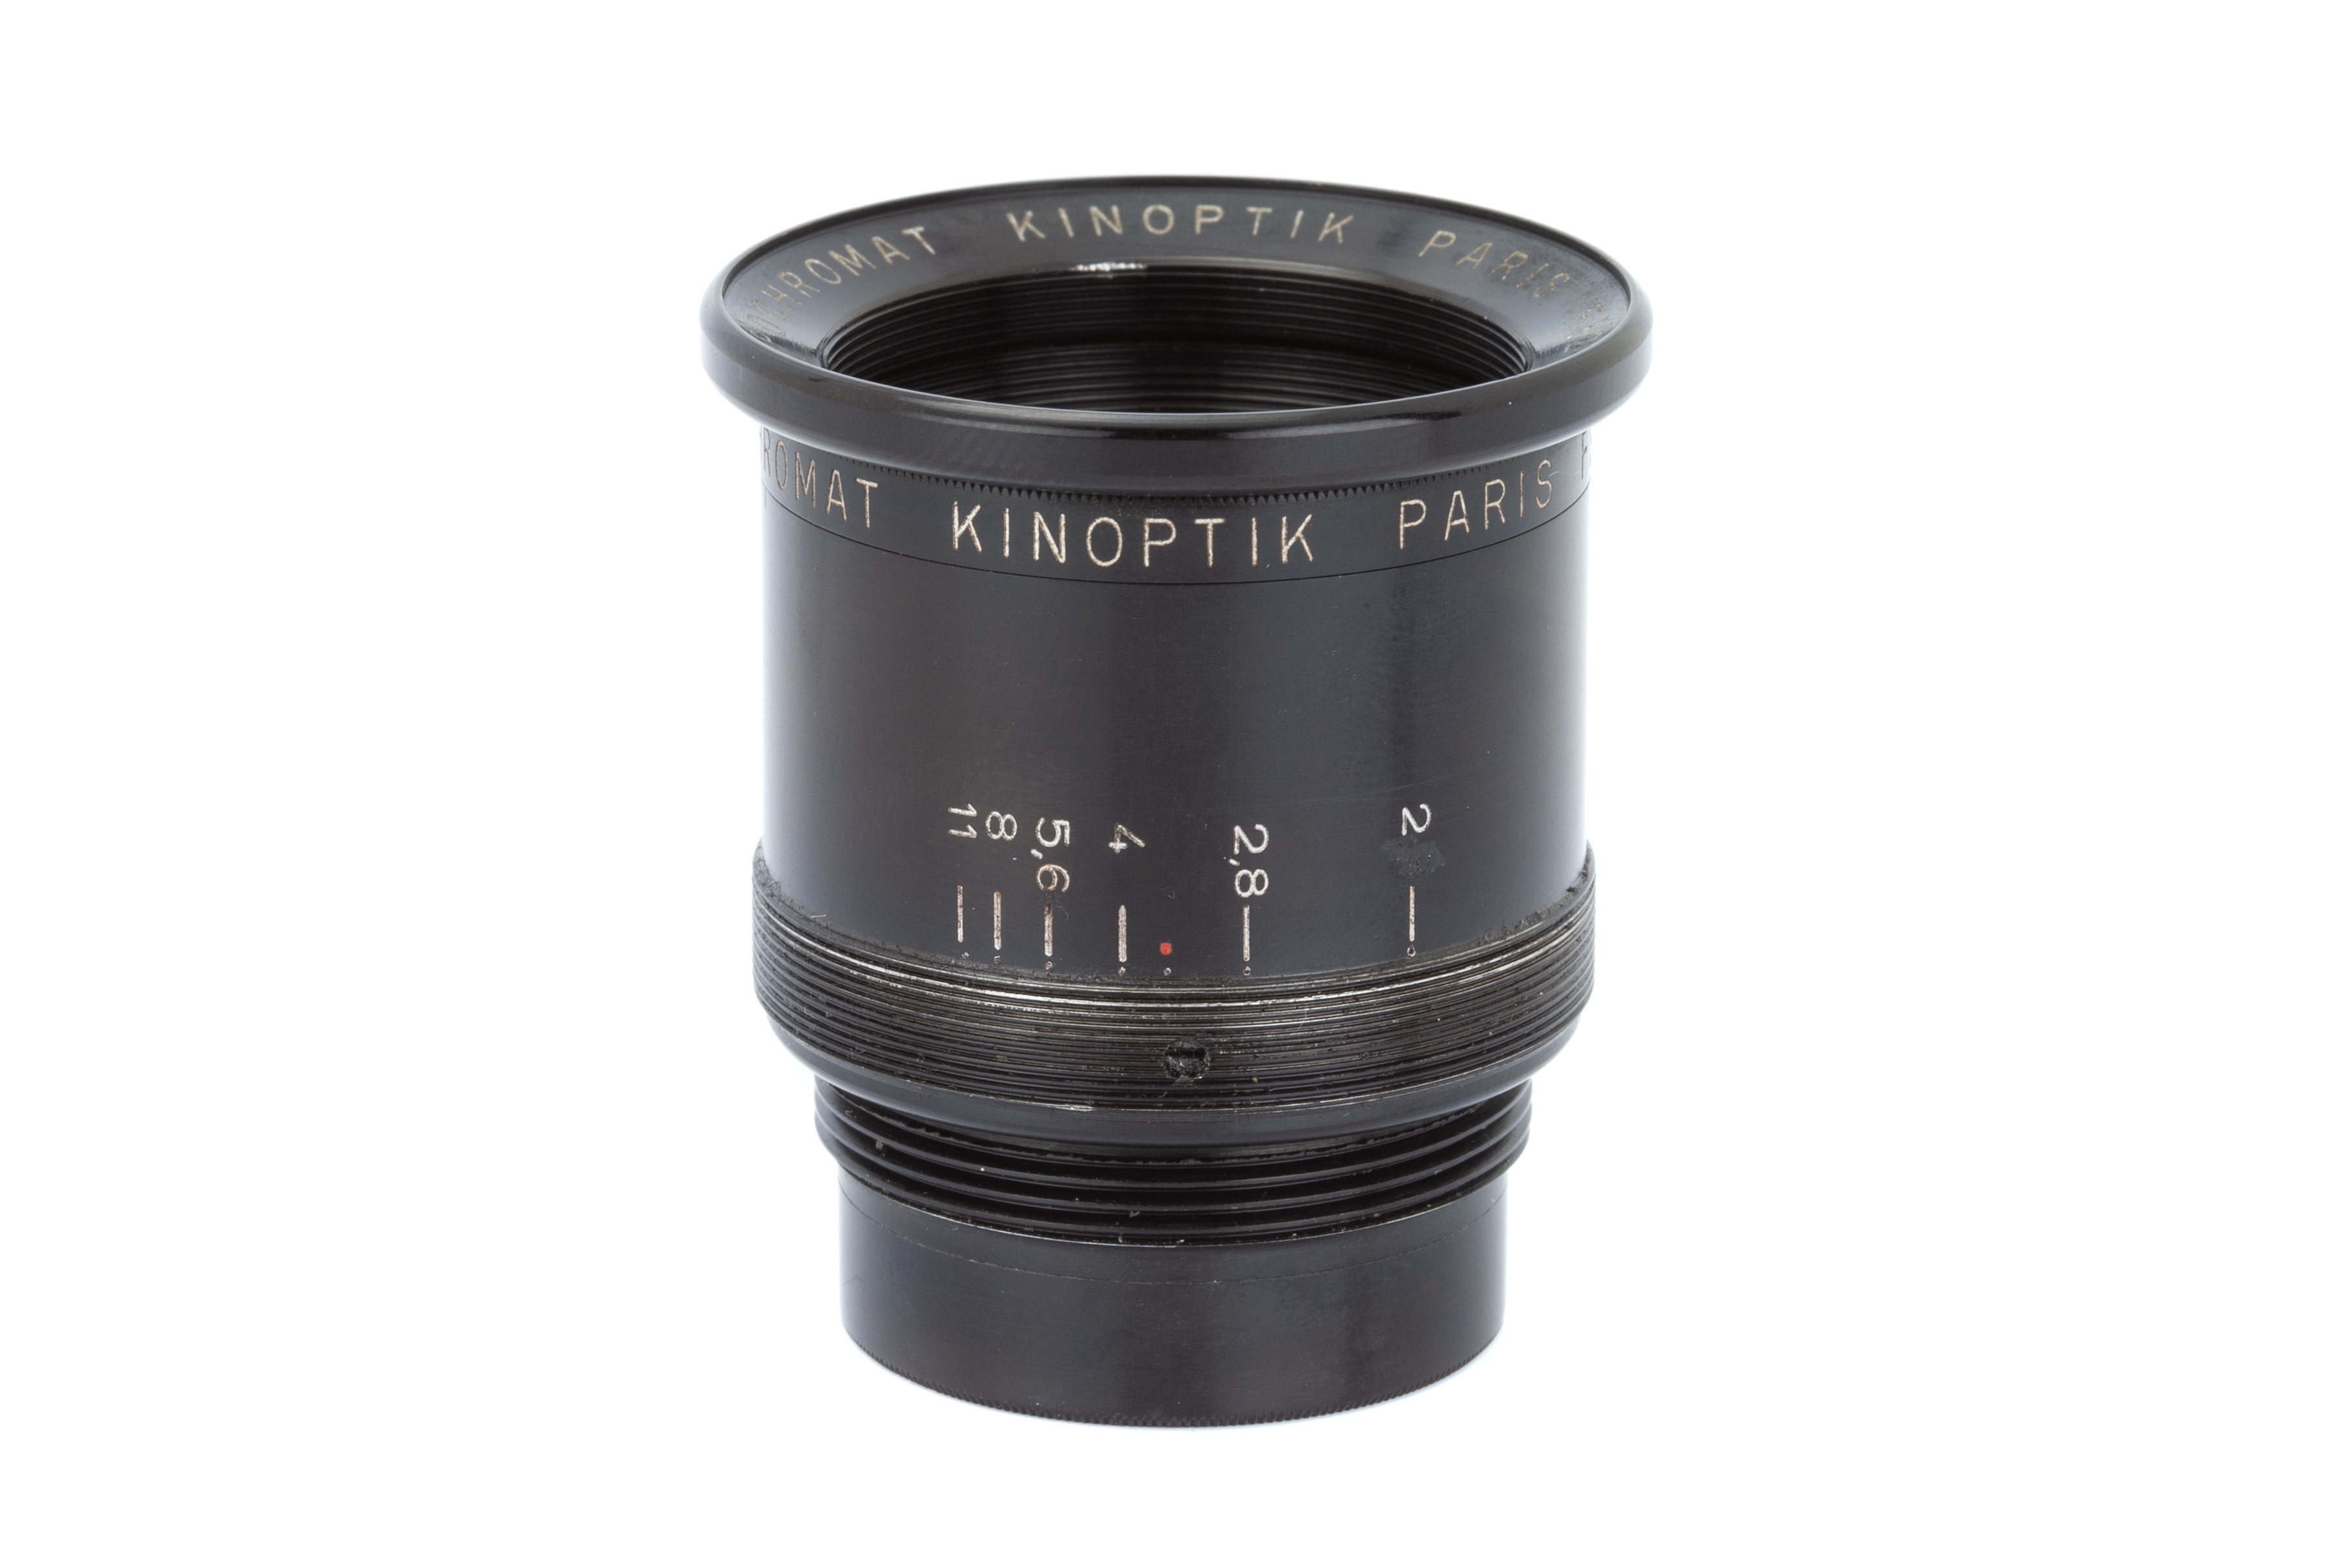 2317 Kinoptik Paris Apochromat 25mm F2-